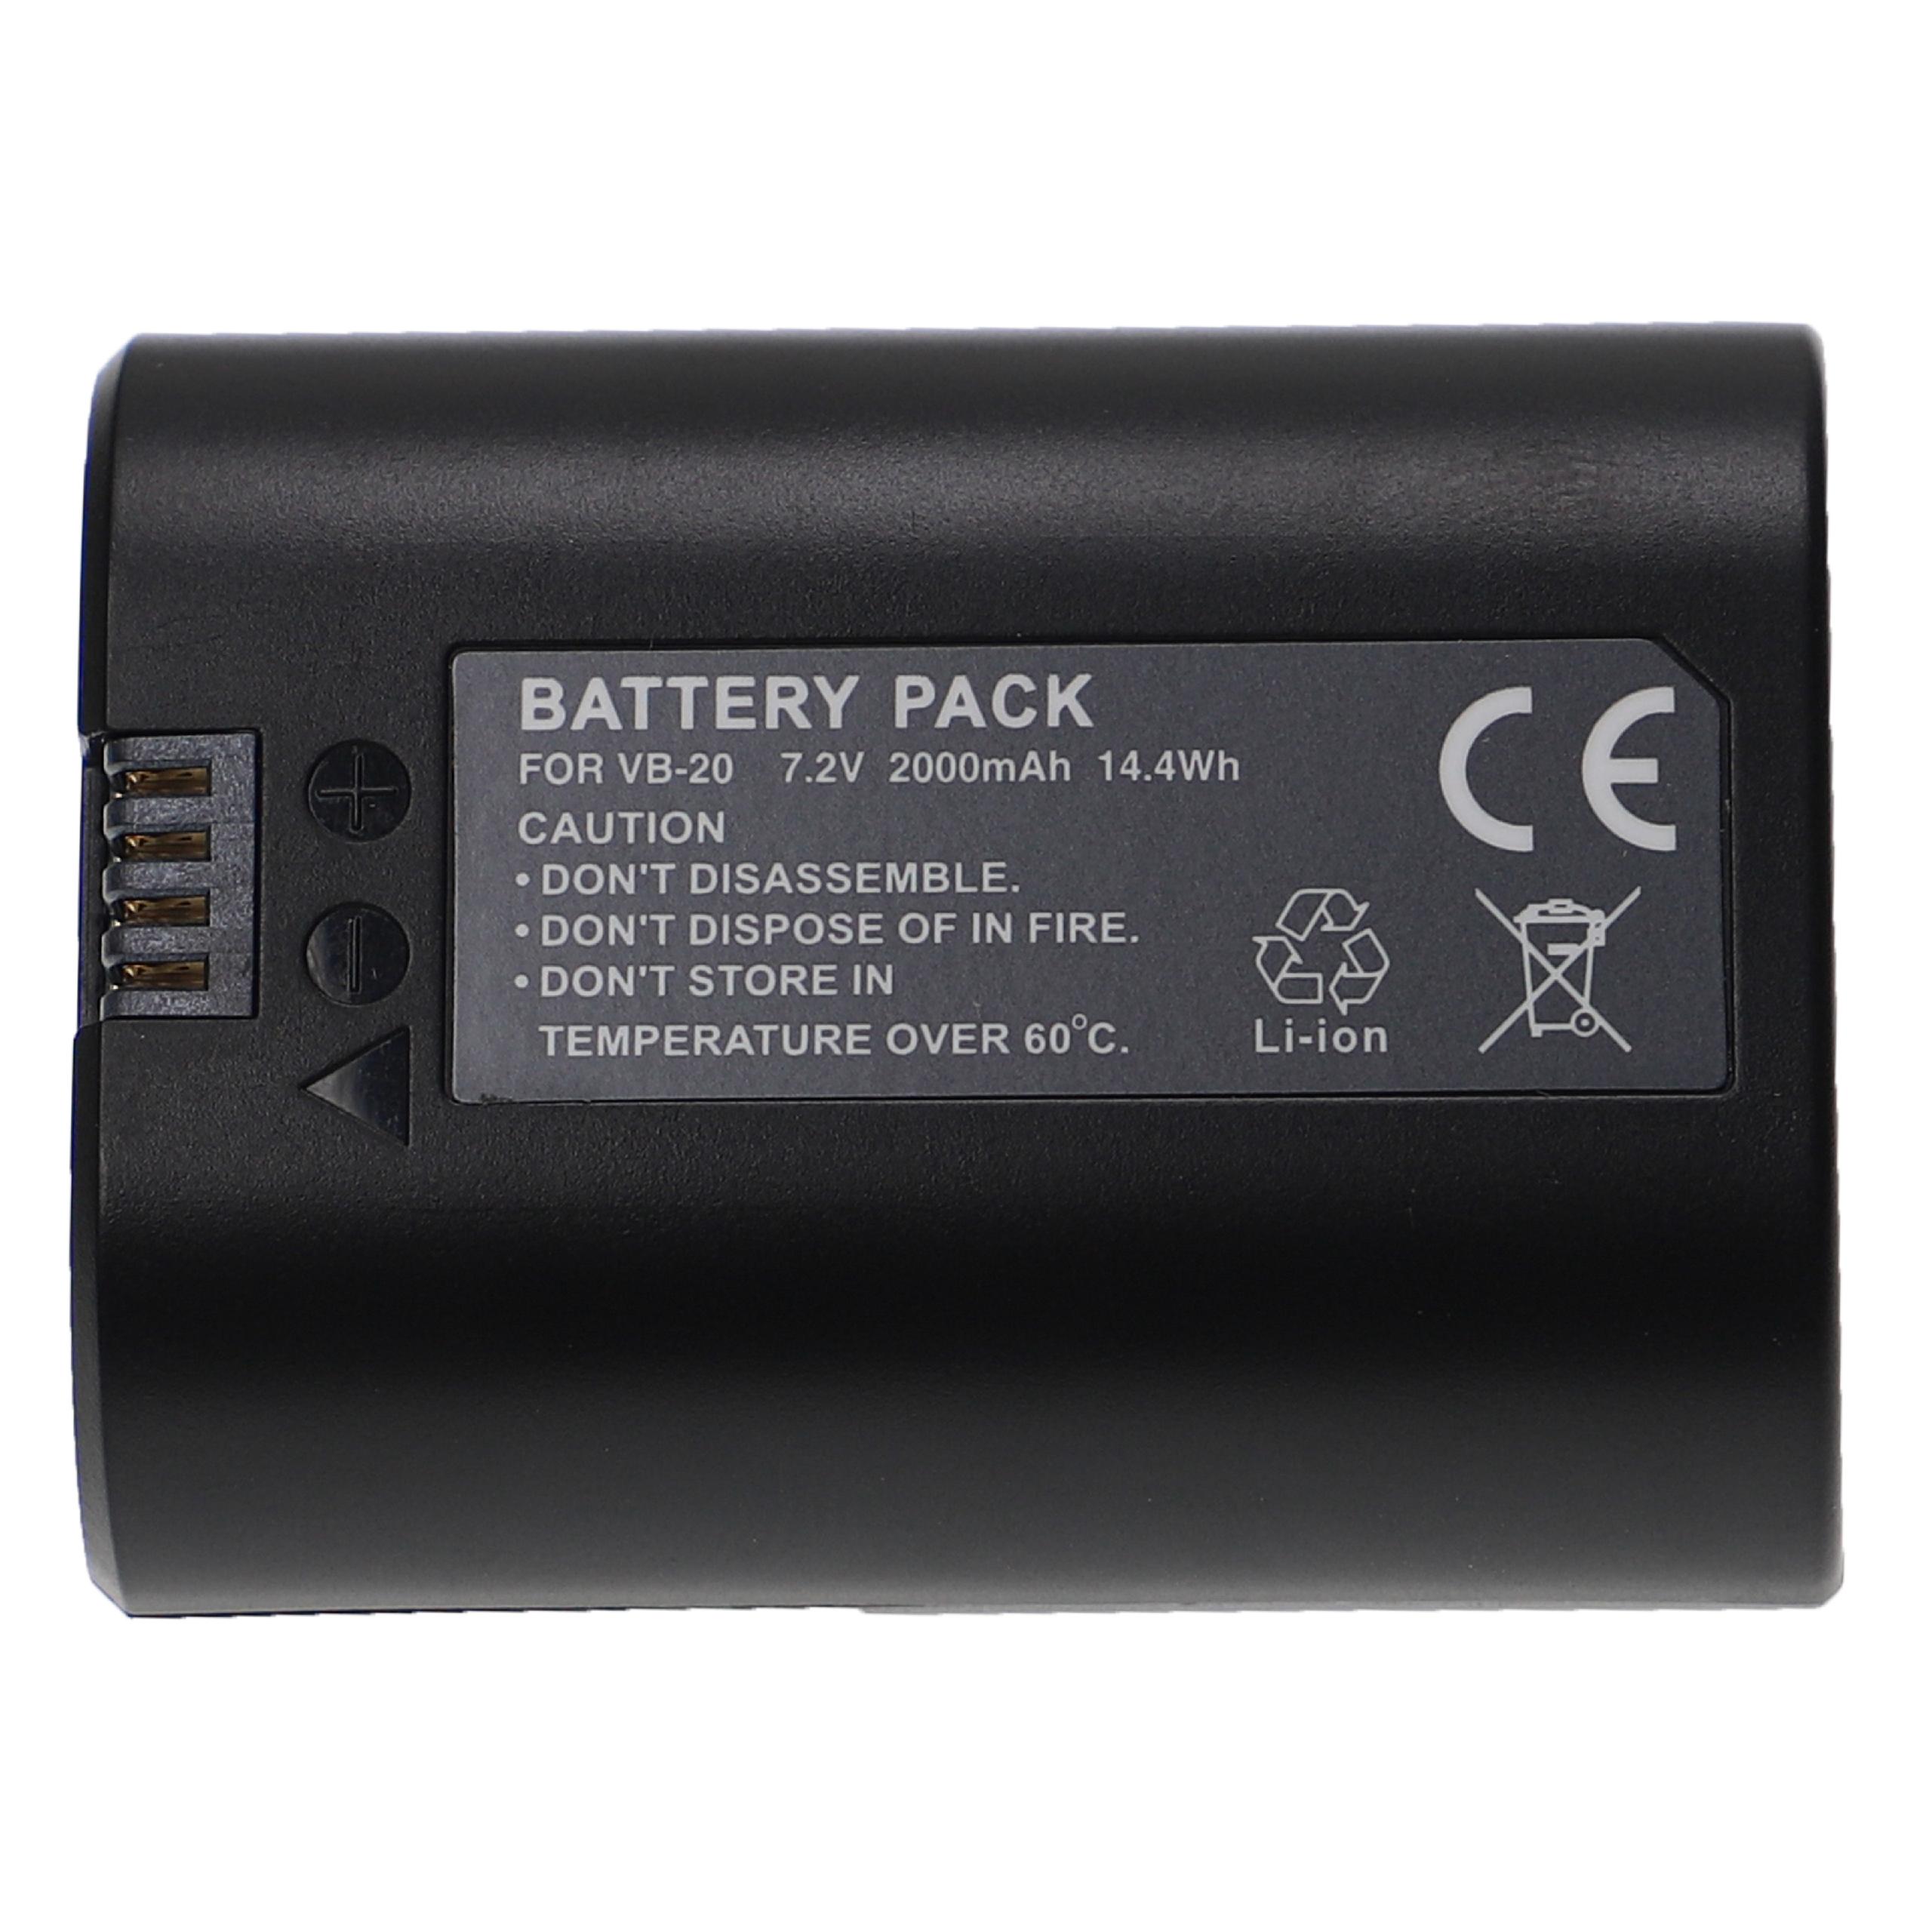 Batterie remplace Godox VB20 pour flash photo - 2000mAh 7,2V Li-ion